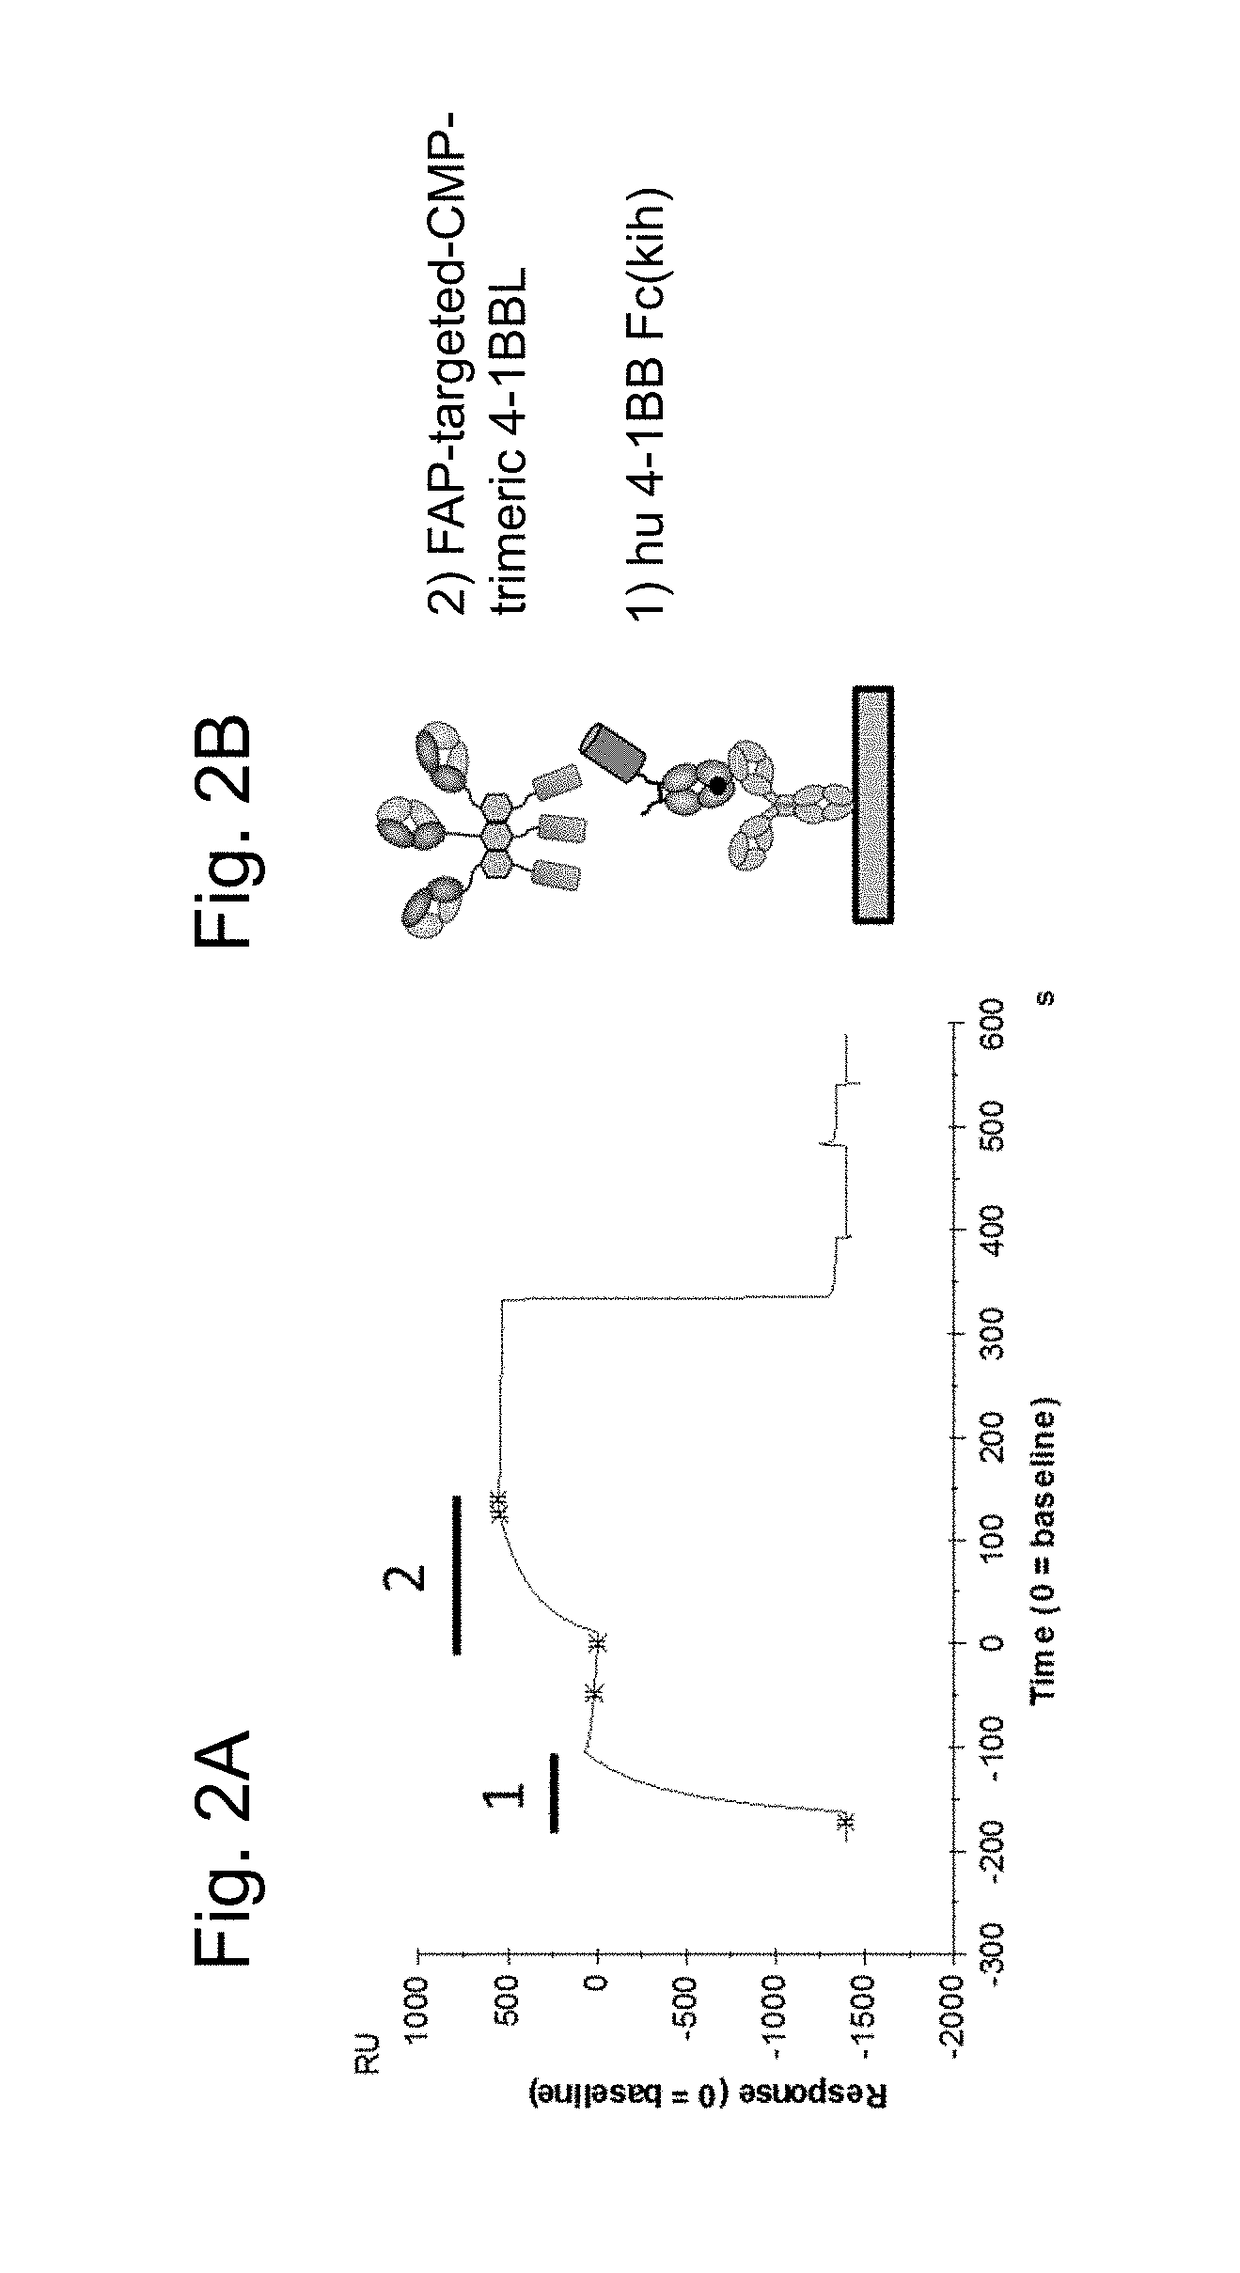 Trimeric costimulatory TNF family ligand-containing antigen binding molecules